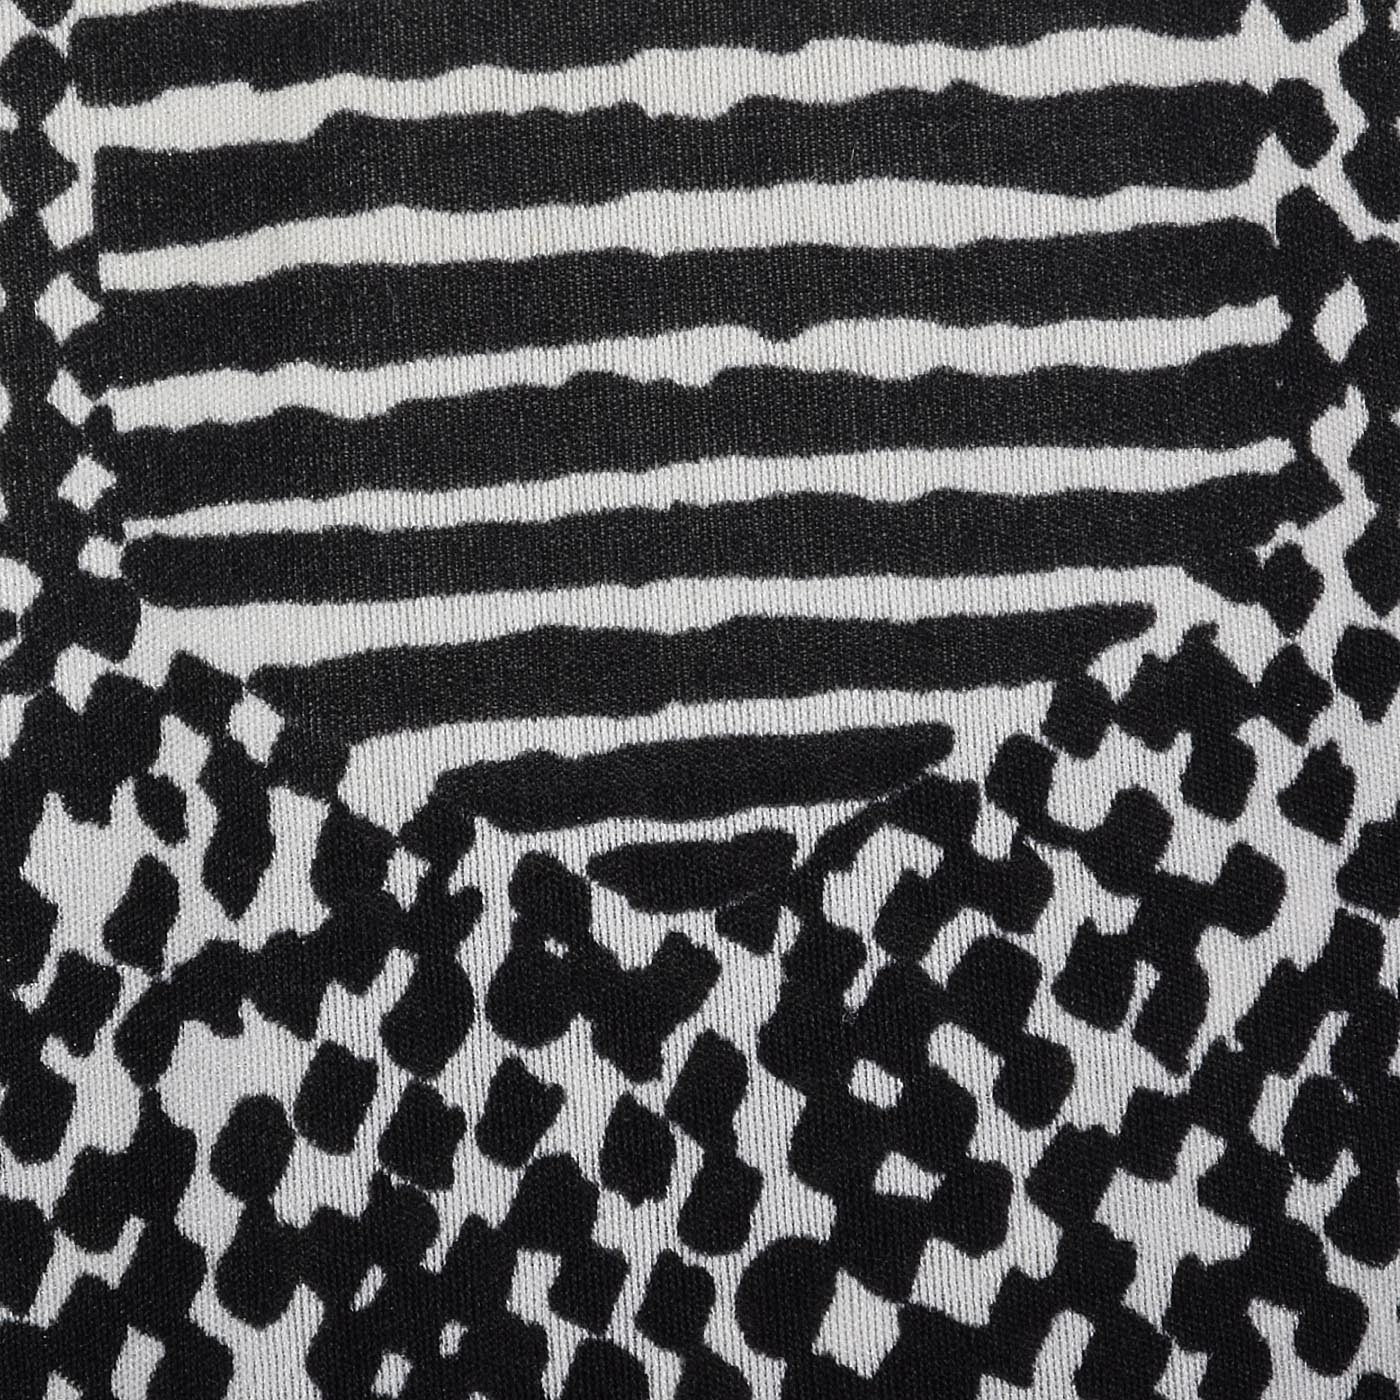 1960s La Mendola Two Piece Seprates Set in Black & White Op Art